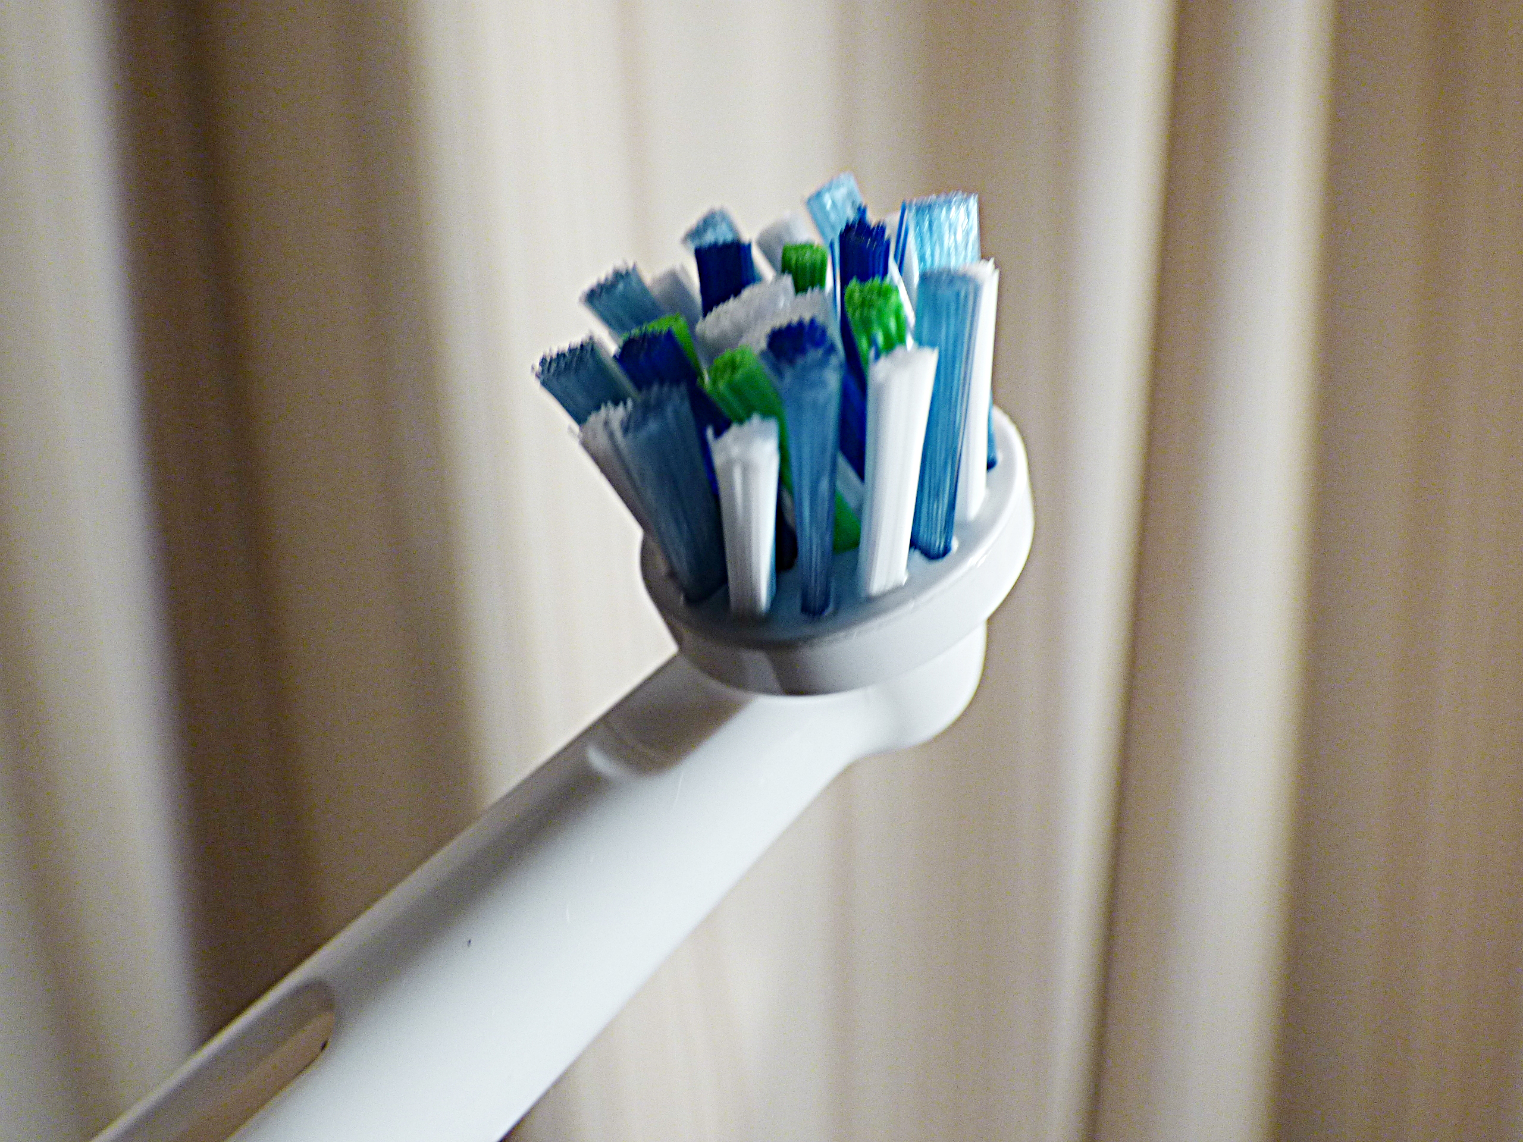 Chez Maximka Oral B Pro 2500 Electric Toothbrush